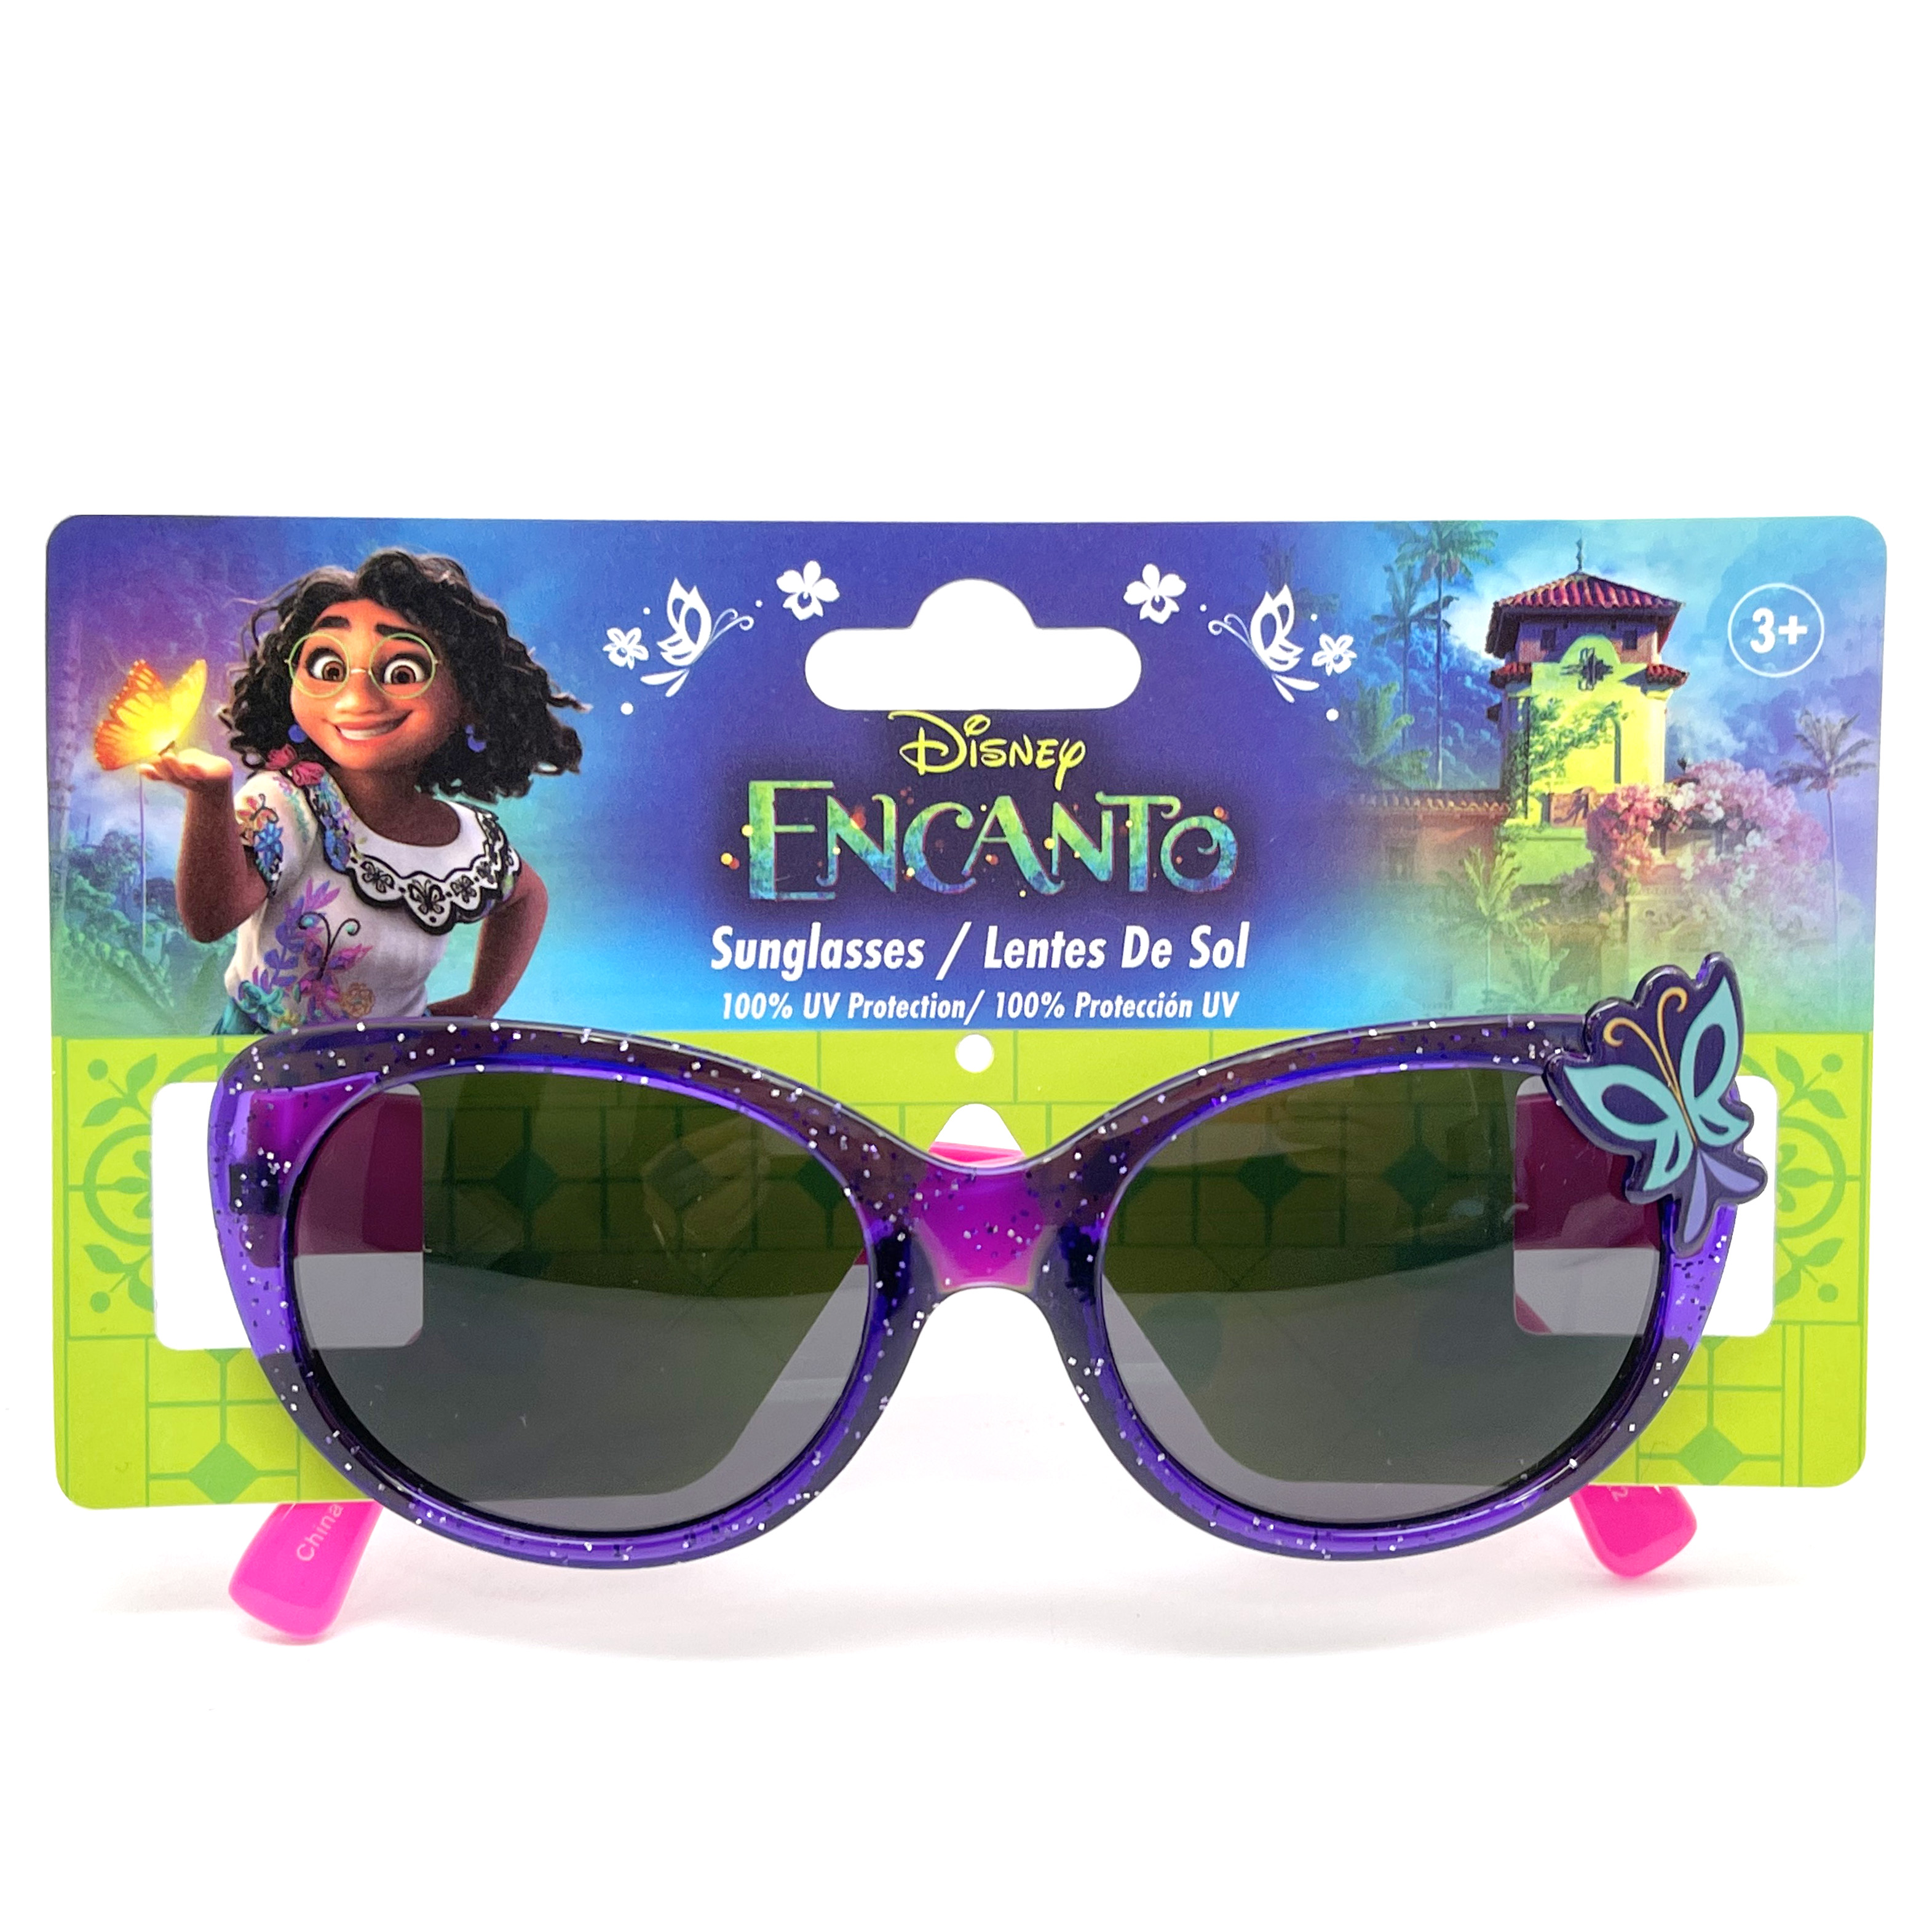 Disney Encanto Girl's Fashion Sunglasses - image 1 of 4